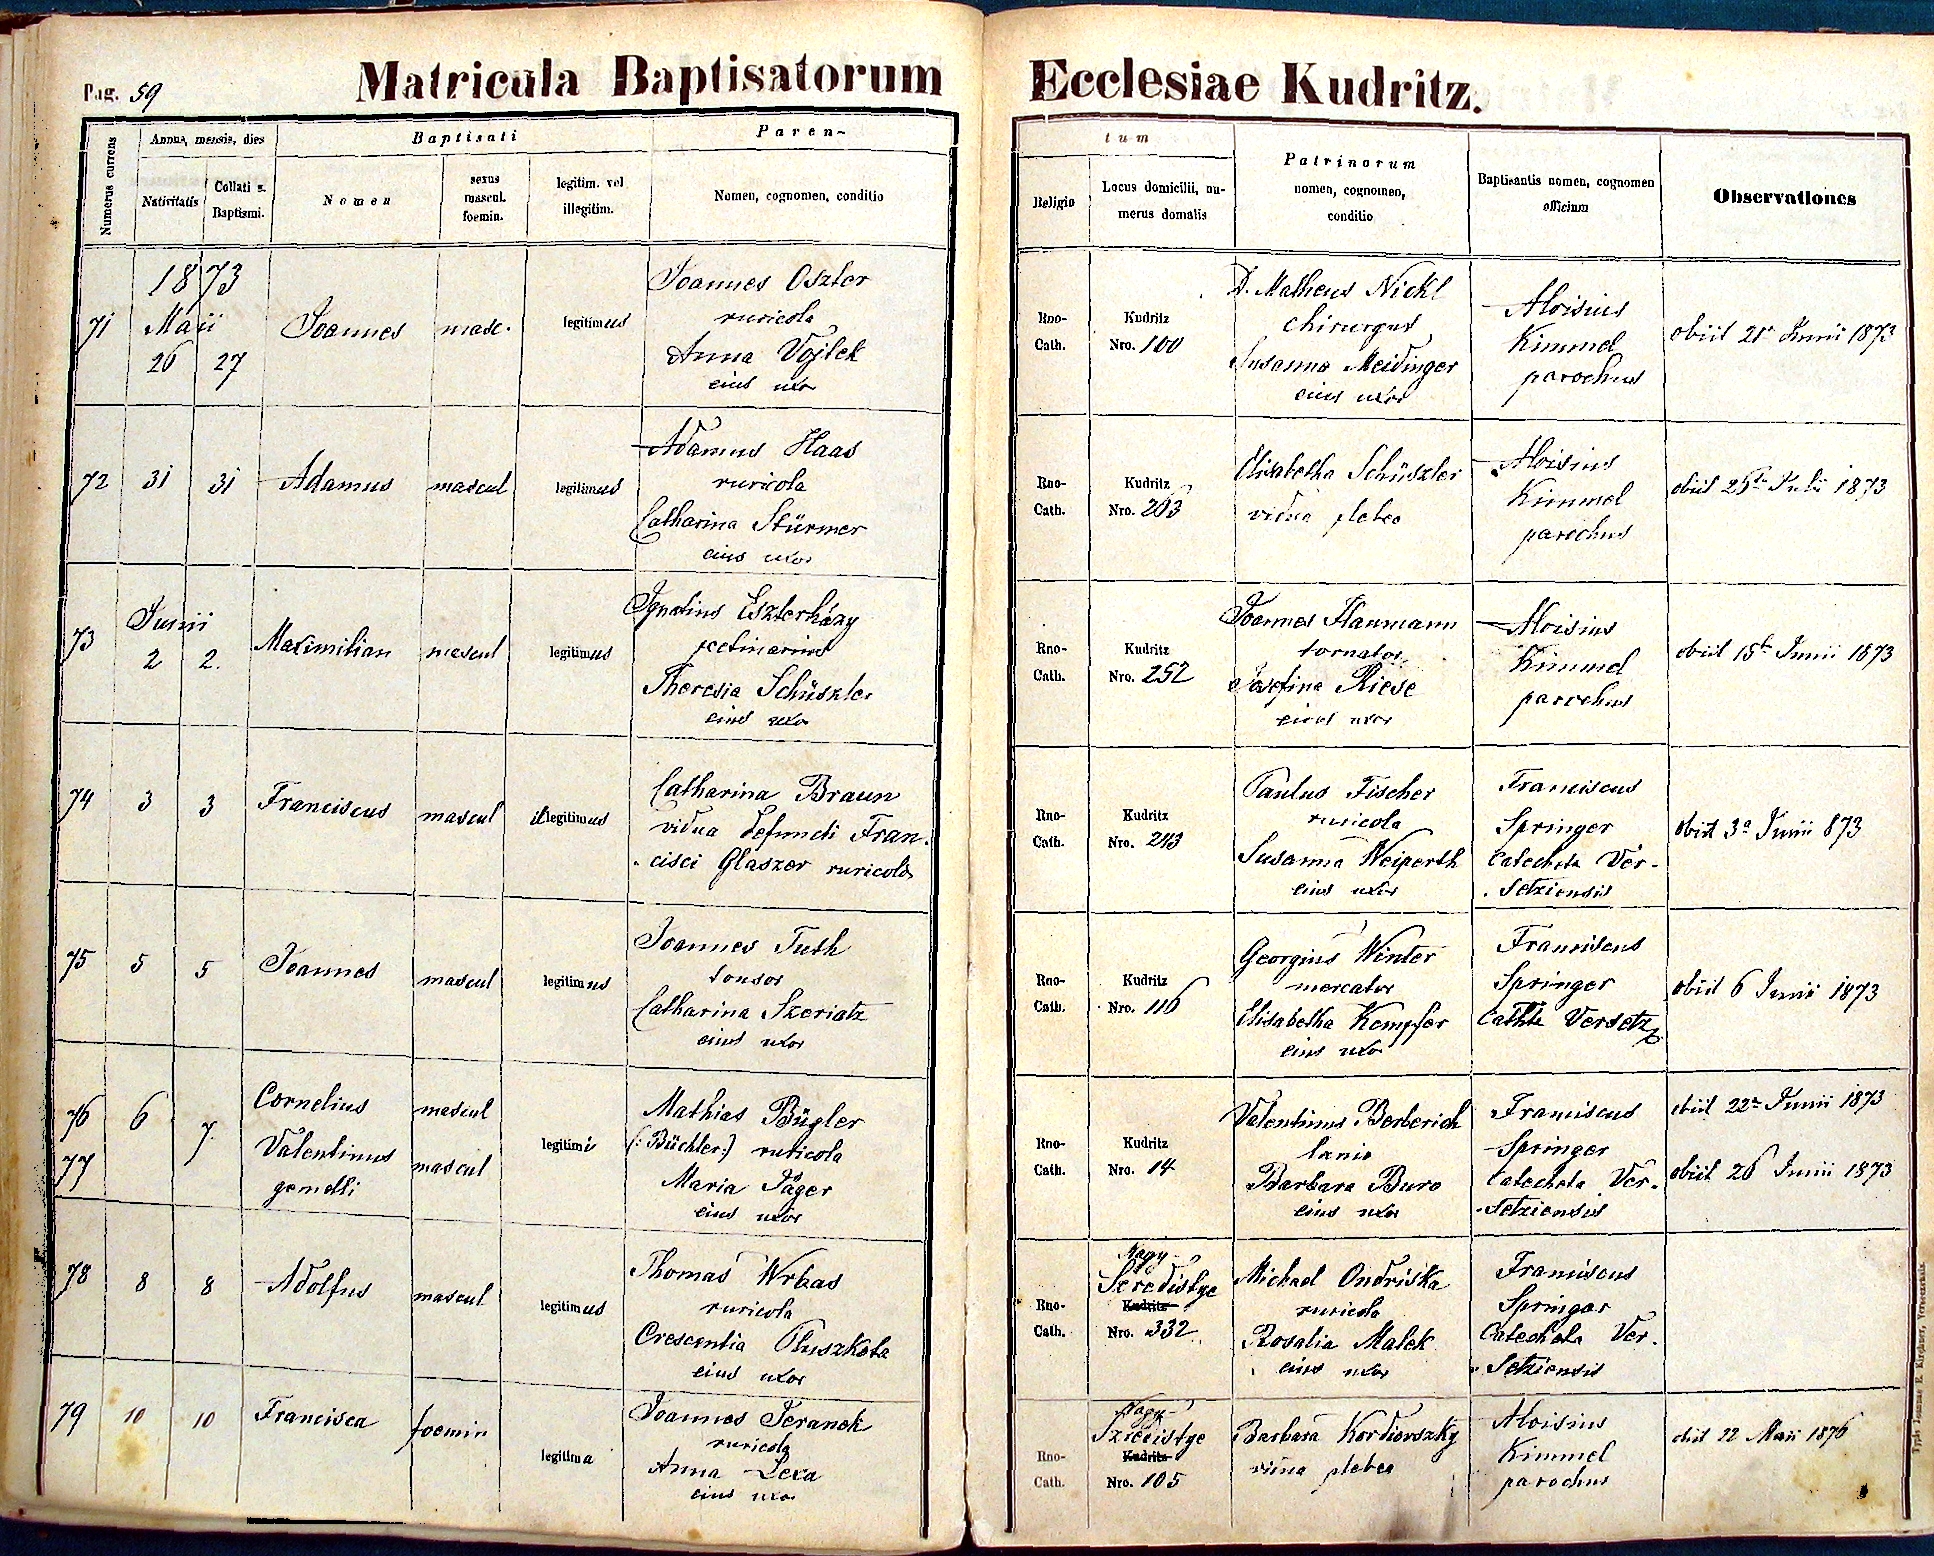 images/church_records/BIRTHS/1884-1899B/1887/059